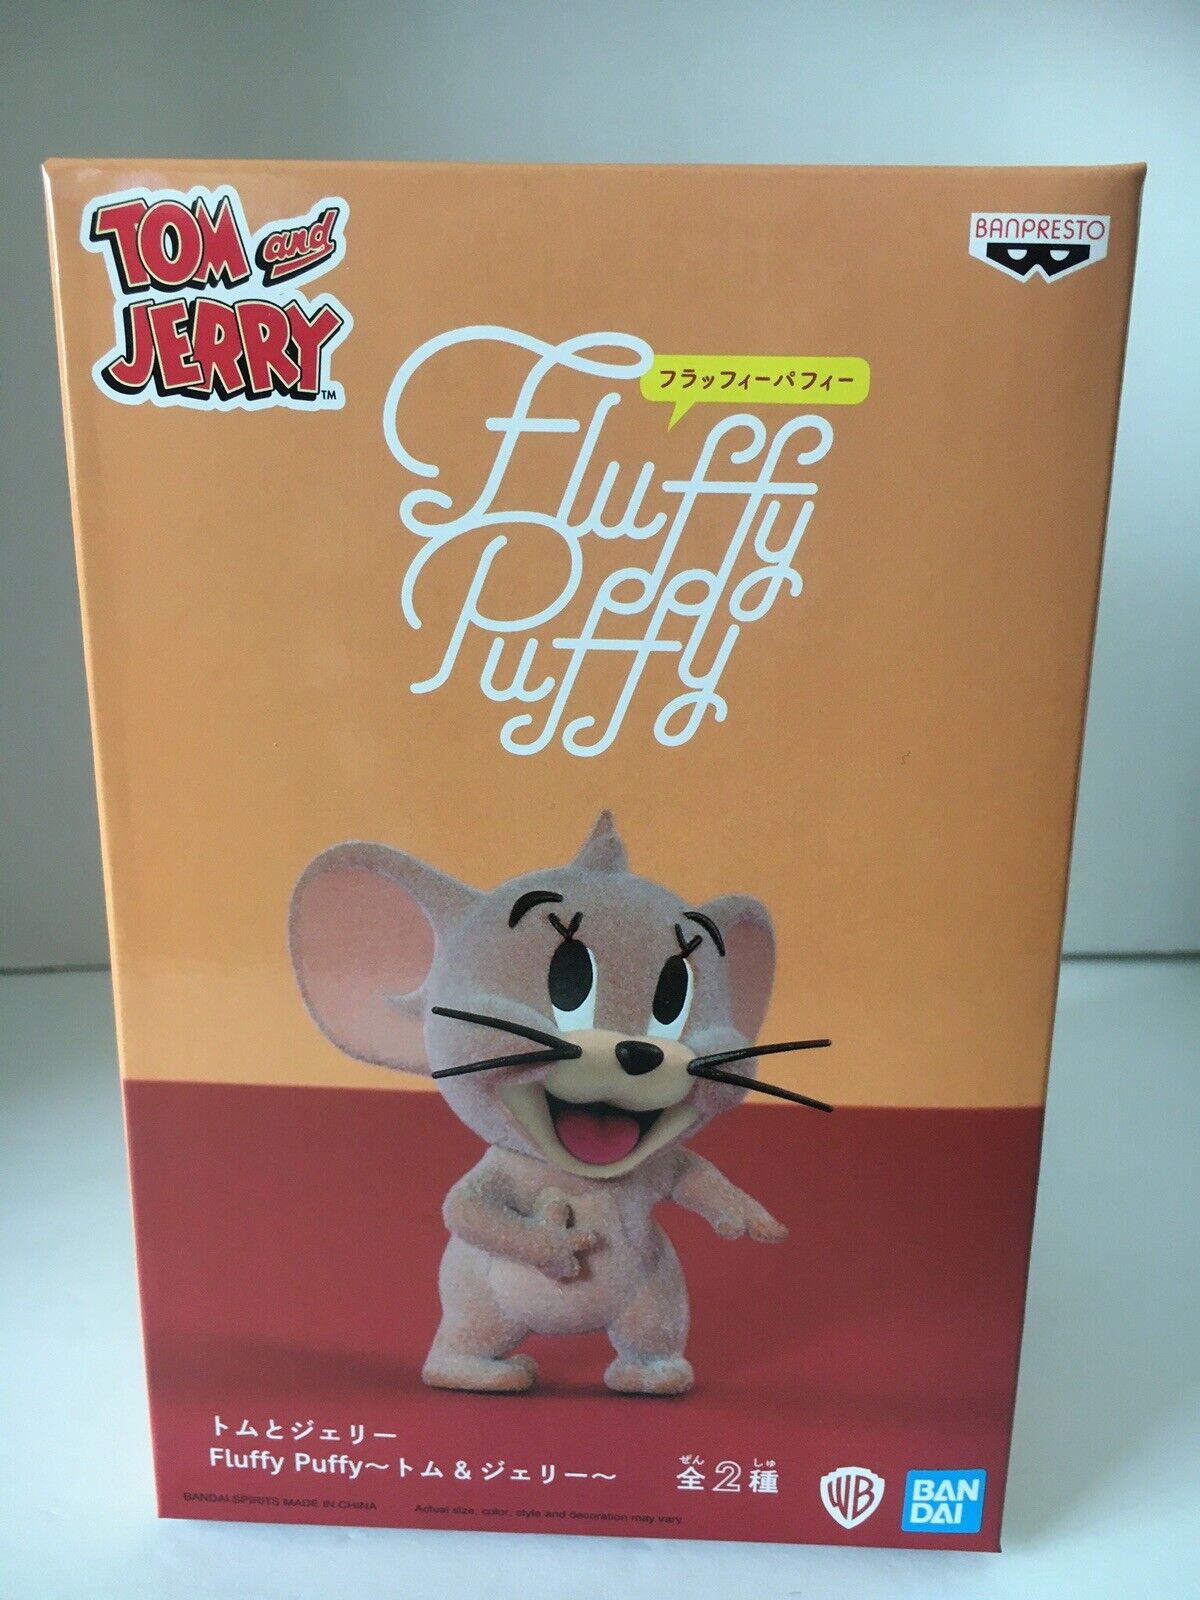 Banpresto Tom and Jerry - JERRY Fluffy Puffy Minifigure New